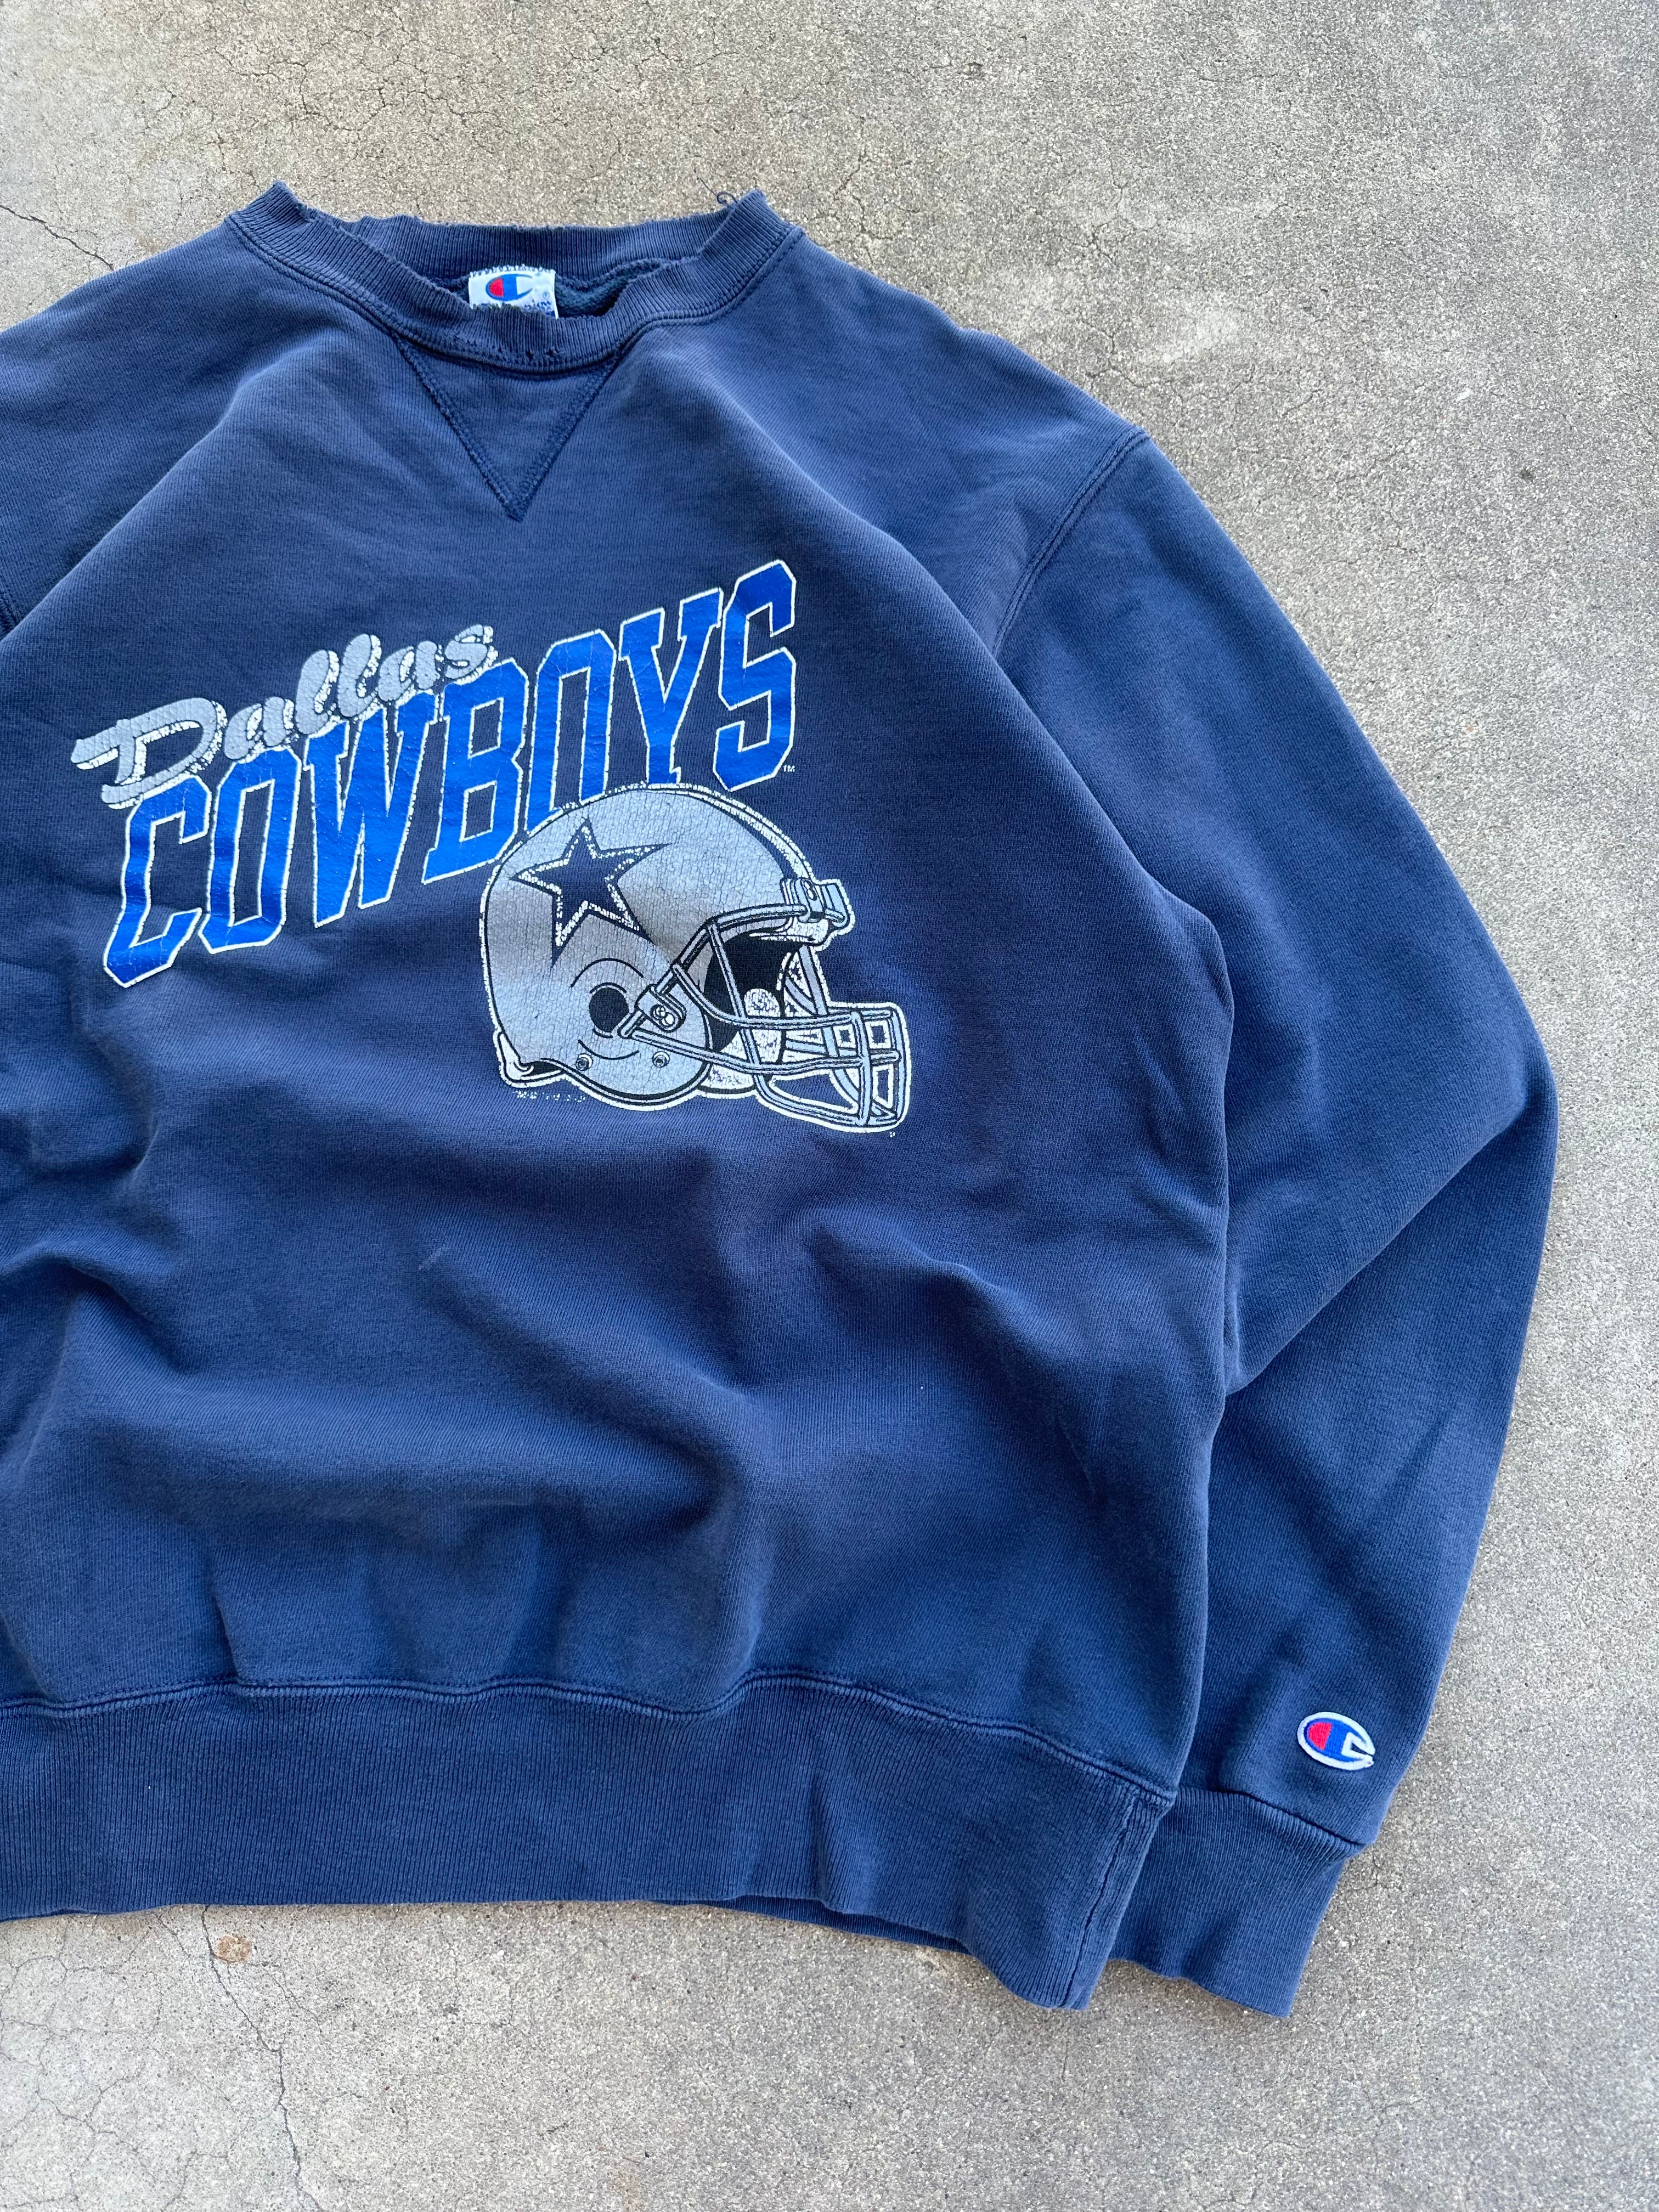 1990s Distressed Dallas Cowboys Crewneck (L)